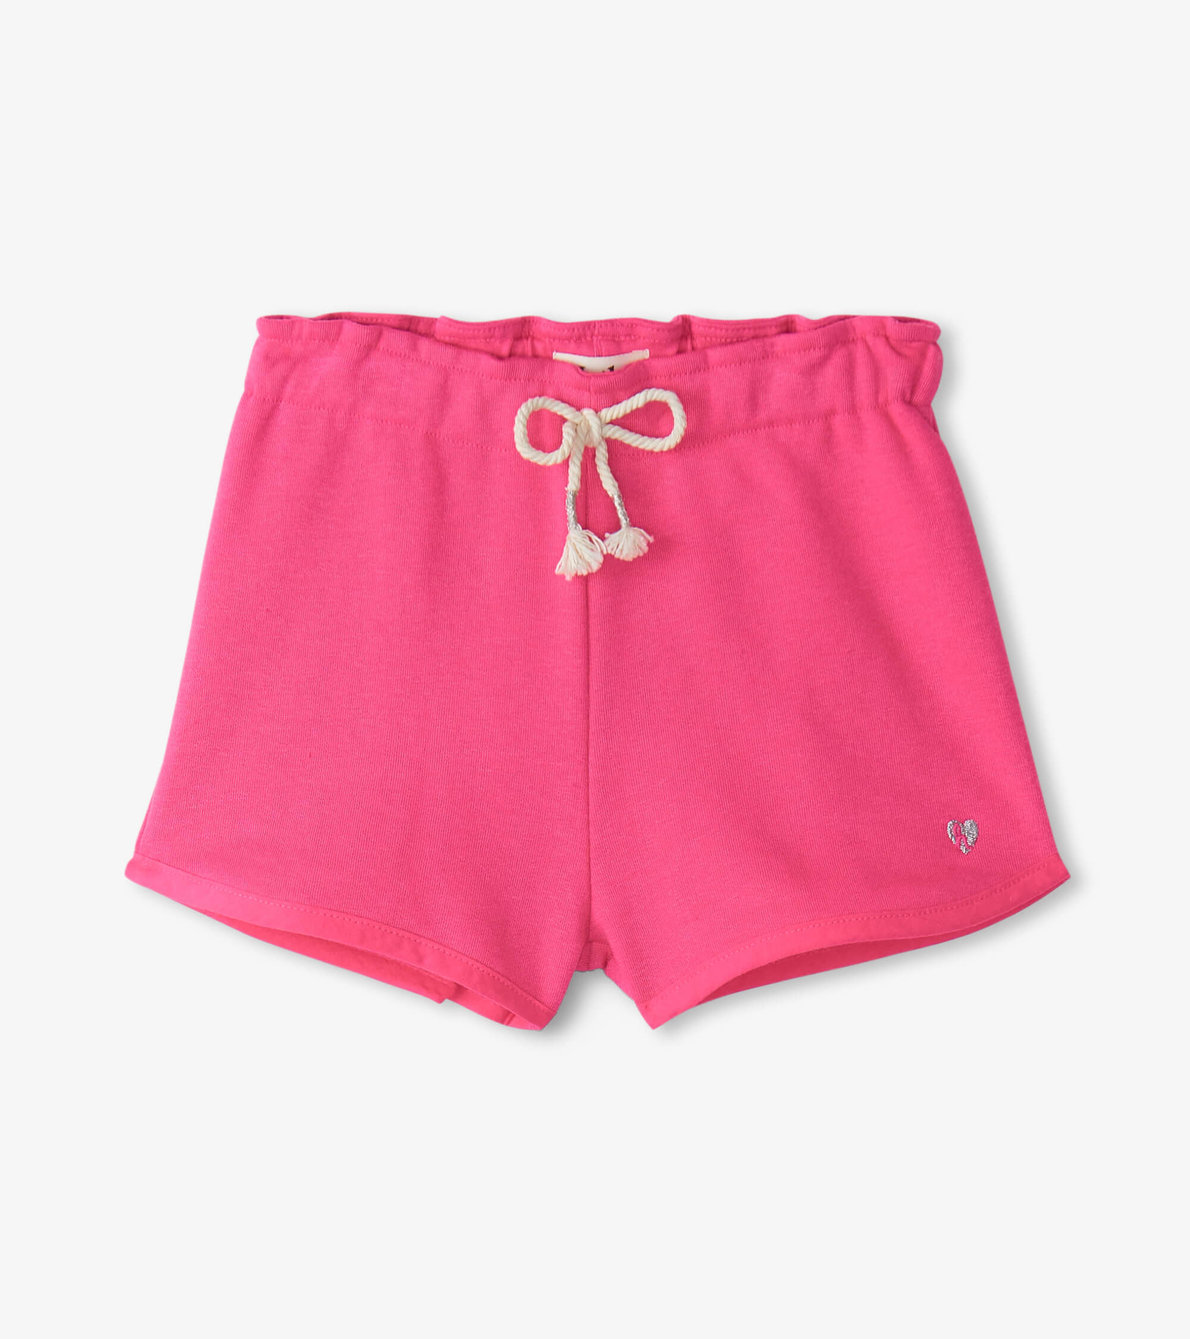 View larger image of Girls Pink Paper Bag Shorts